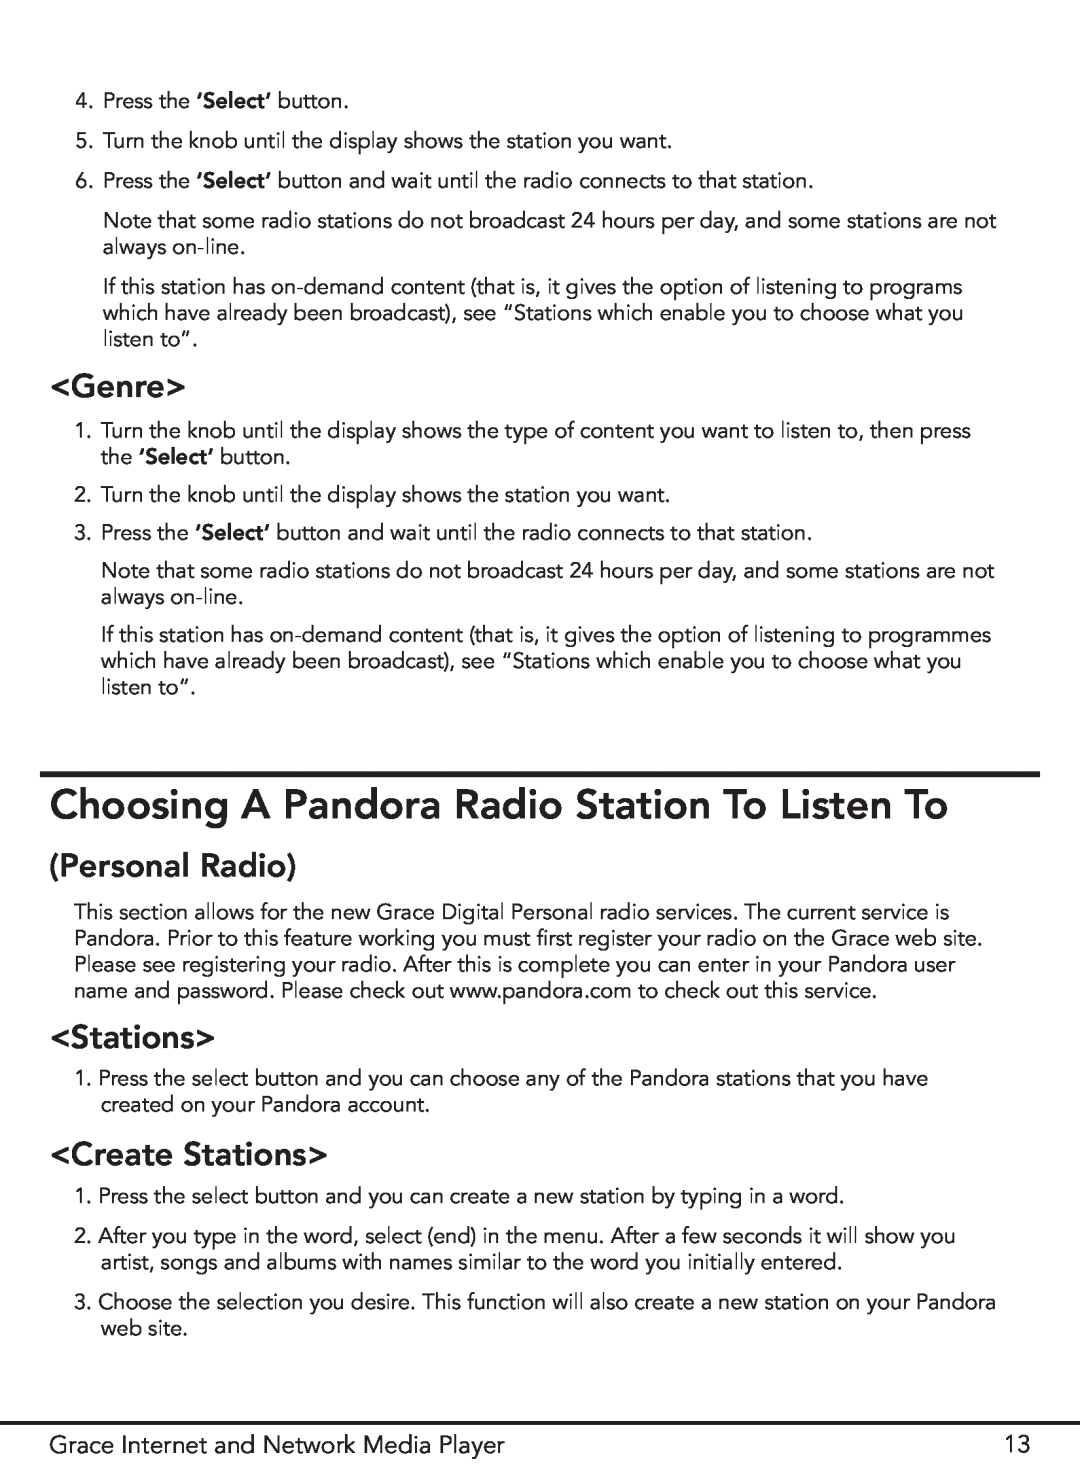 Grace GDI-IR3000 manual Choosing A Pandora Radio Station To Listen To, Genre, Personal Radio, Create Stations 